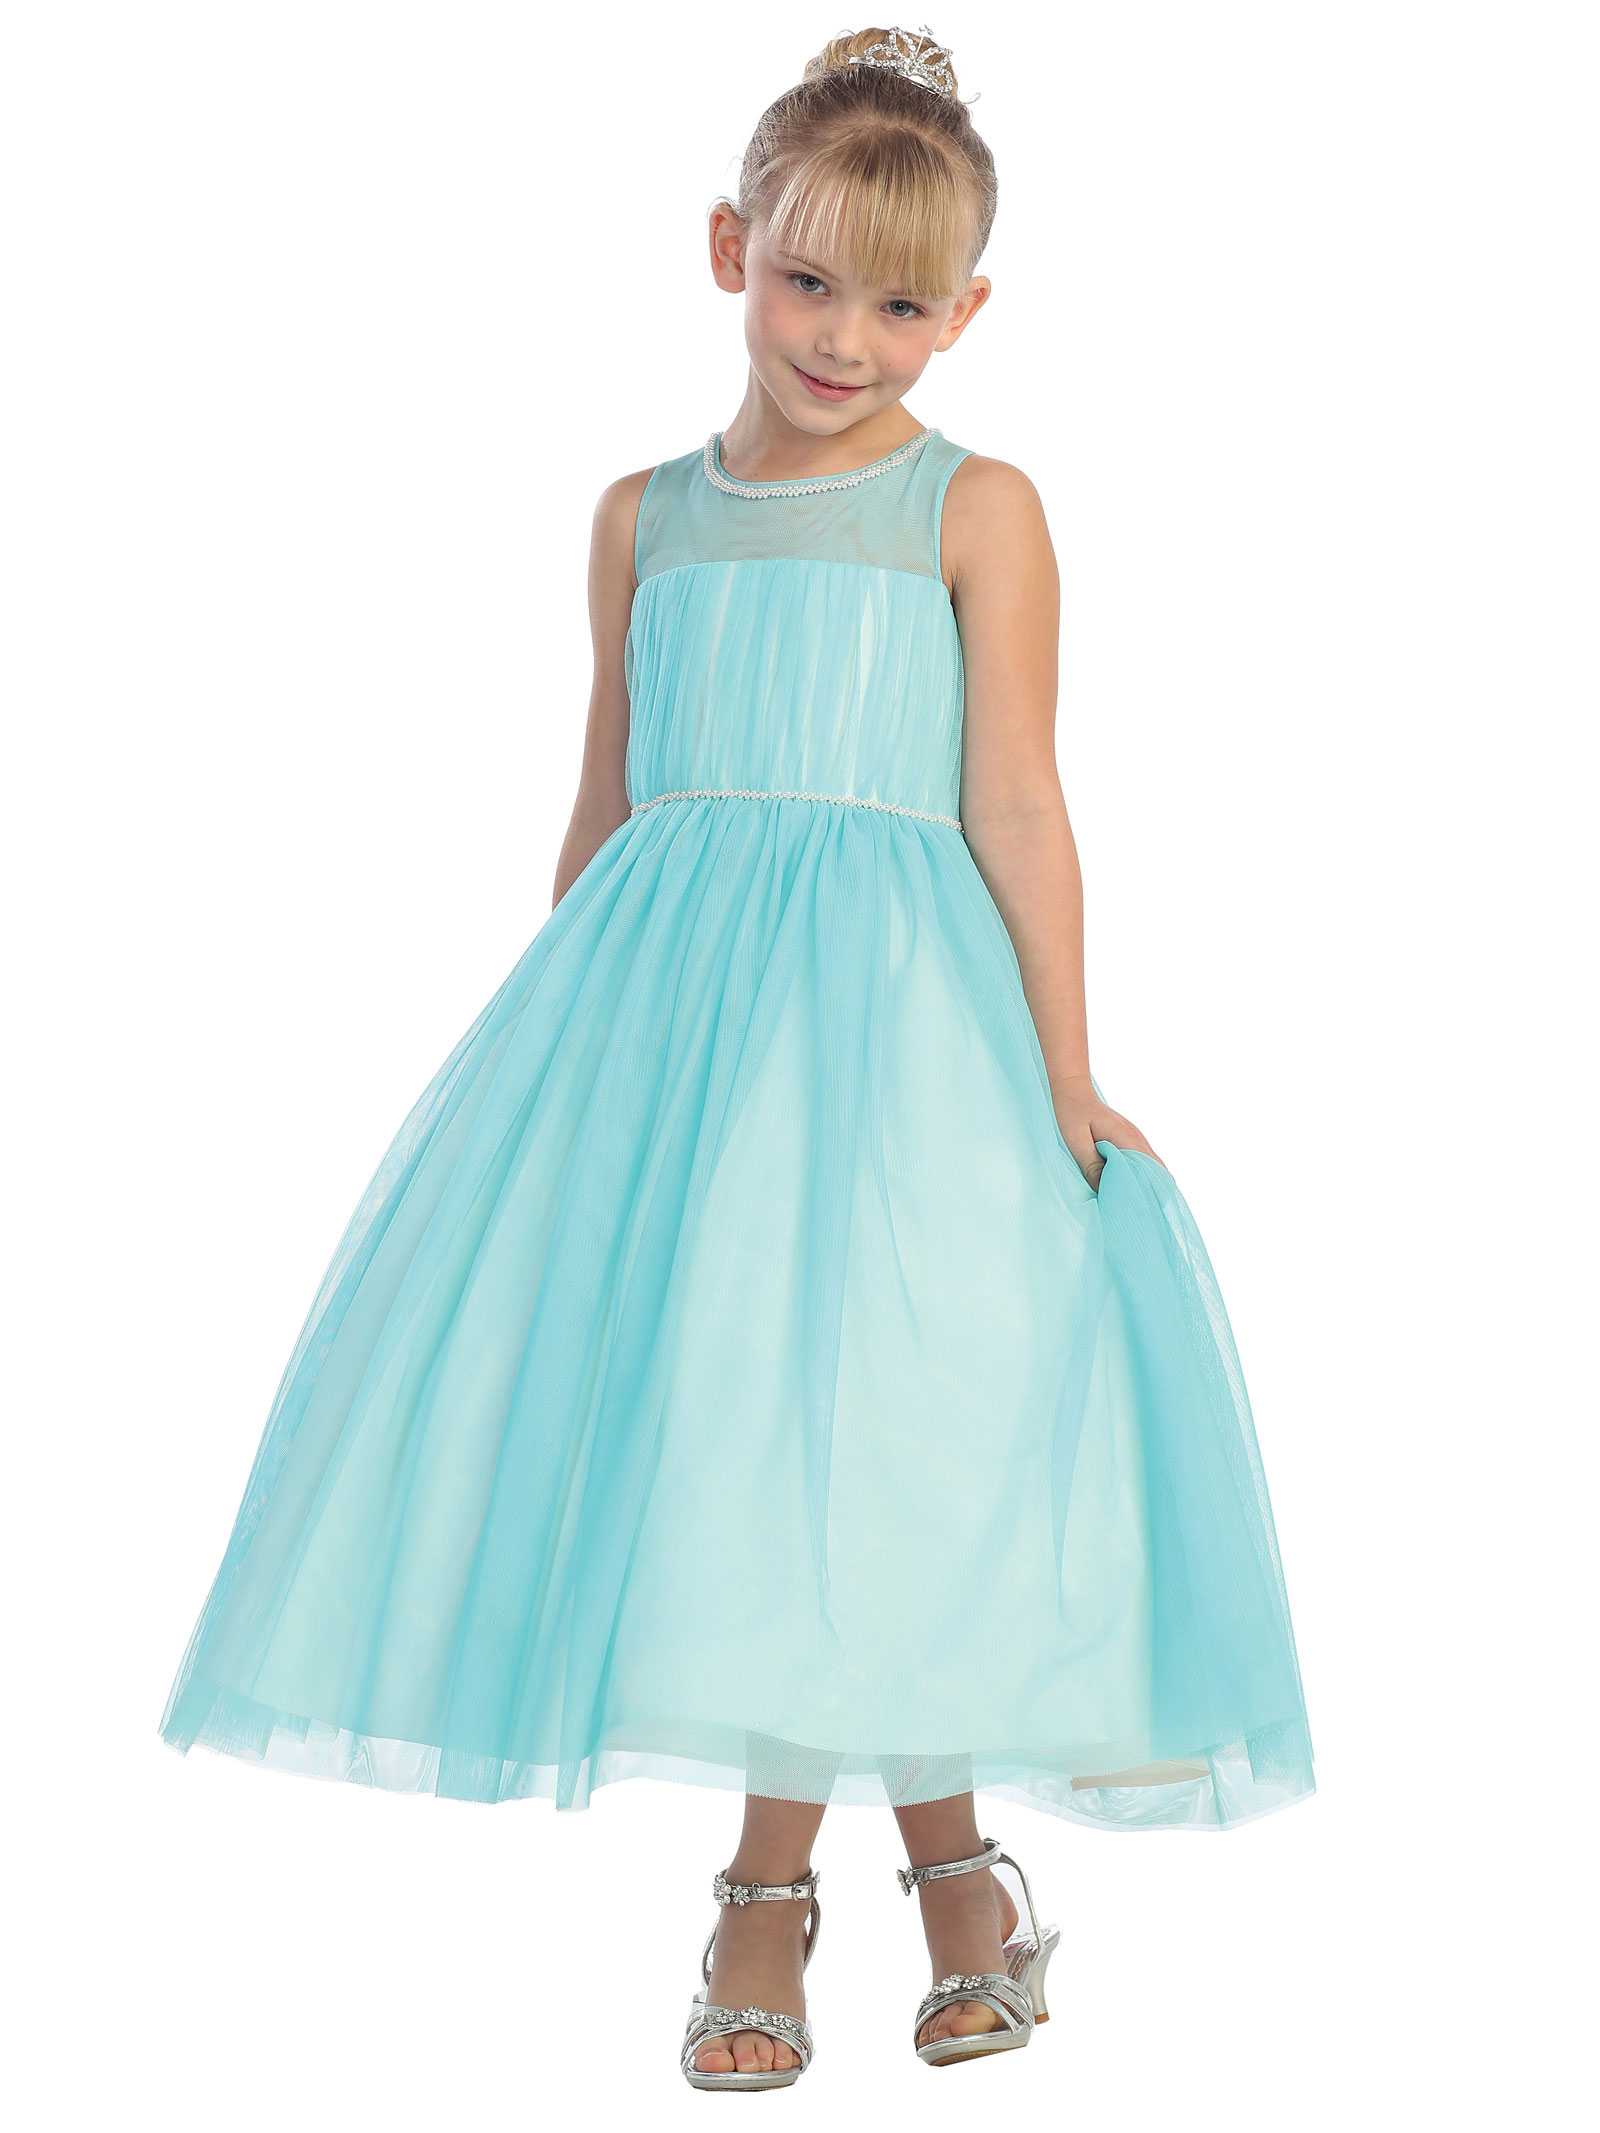 TT_5609AQ - Girls Dress Style 5609- Sleeveless Organza Dress with ...